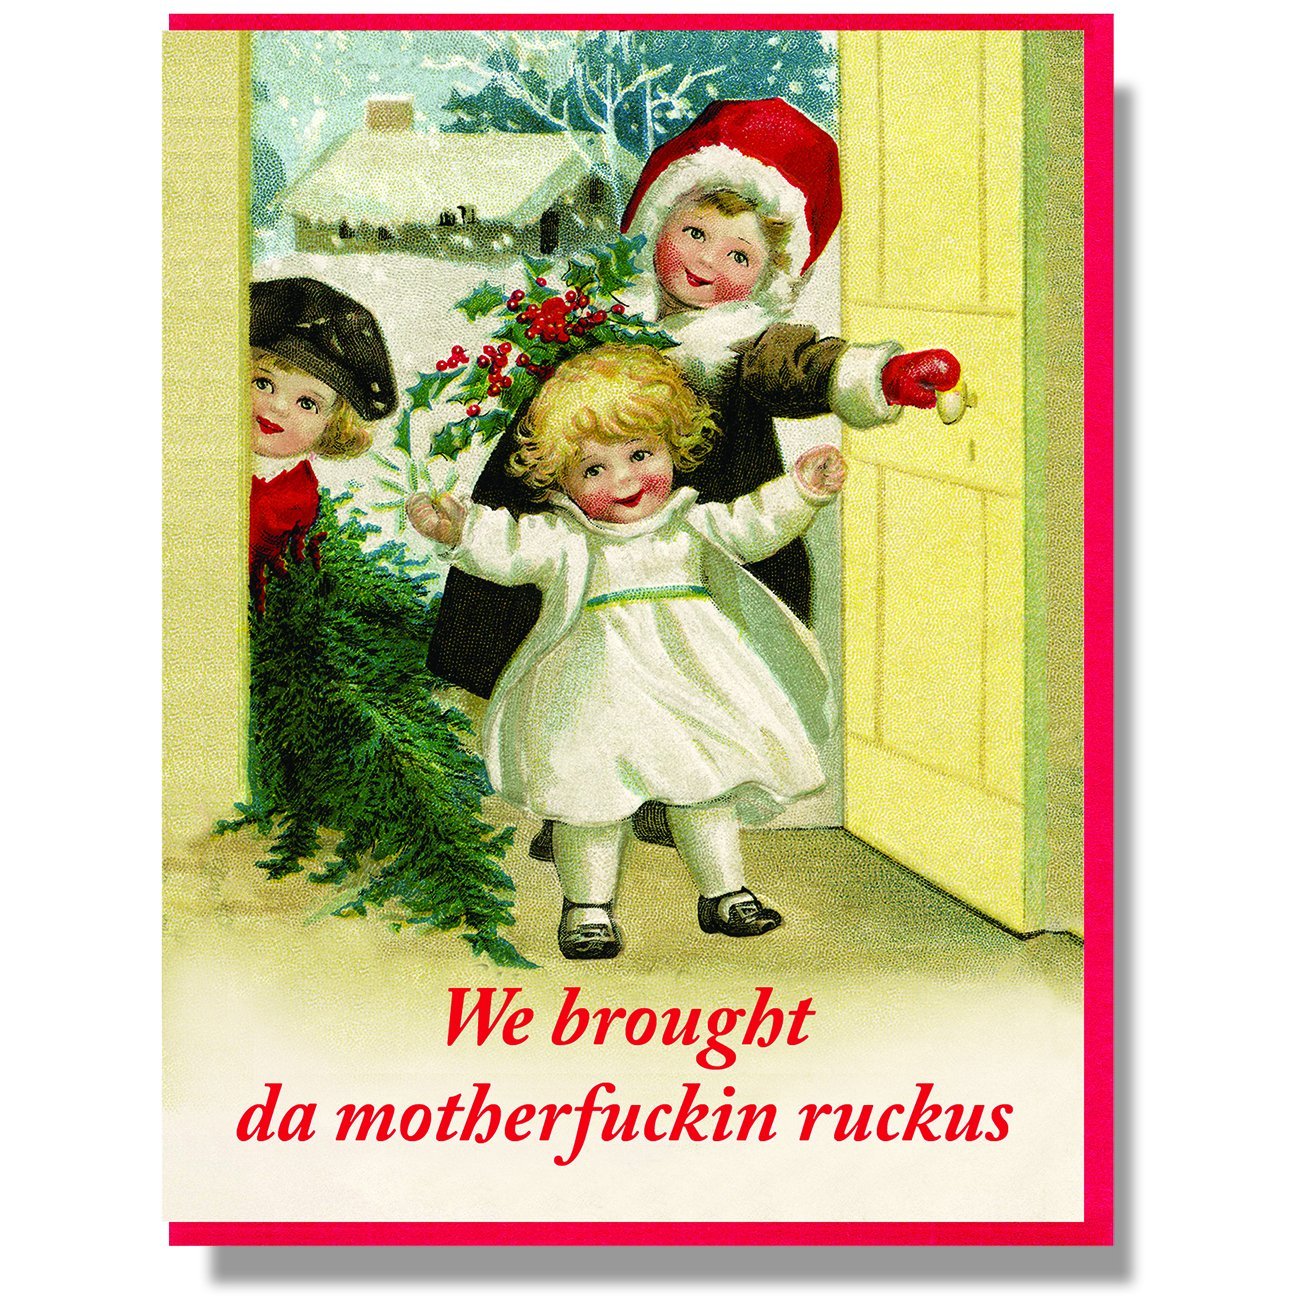 Smitten Kitten: "We brought da motherfuckin ruckus" Boxed Holiday Cards